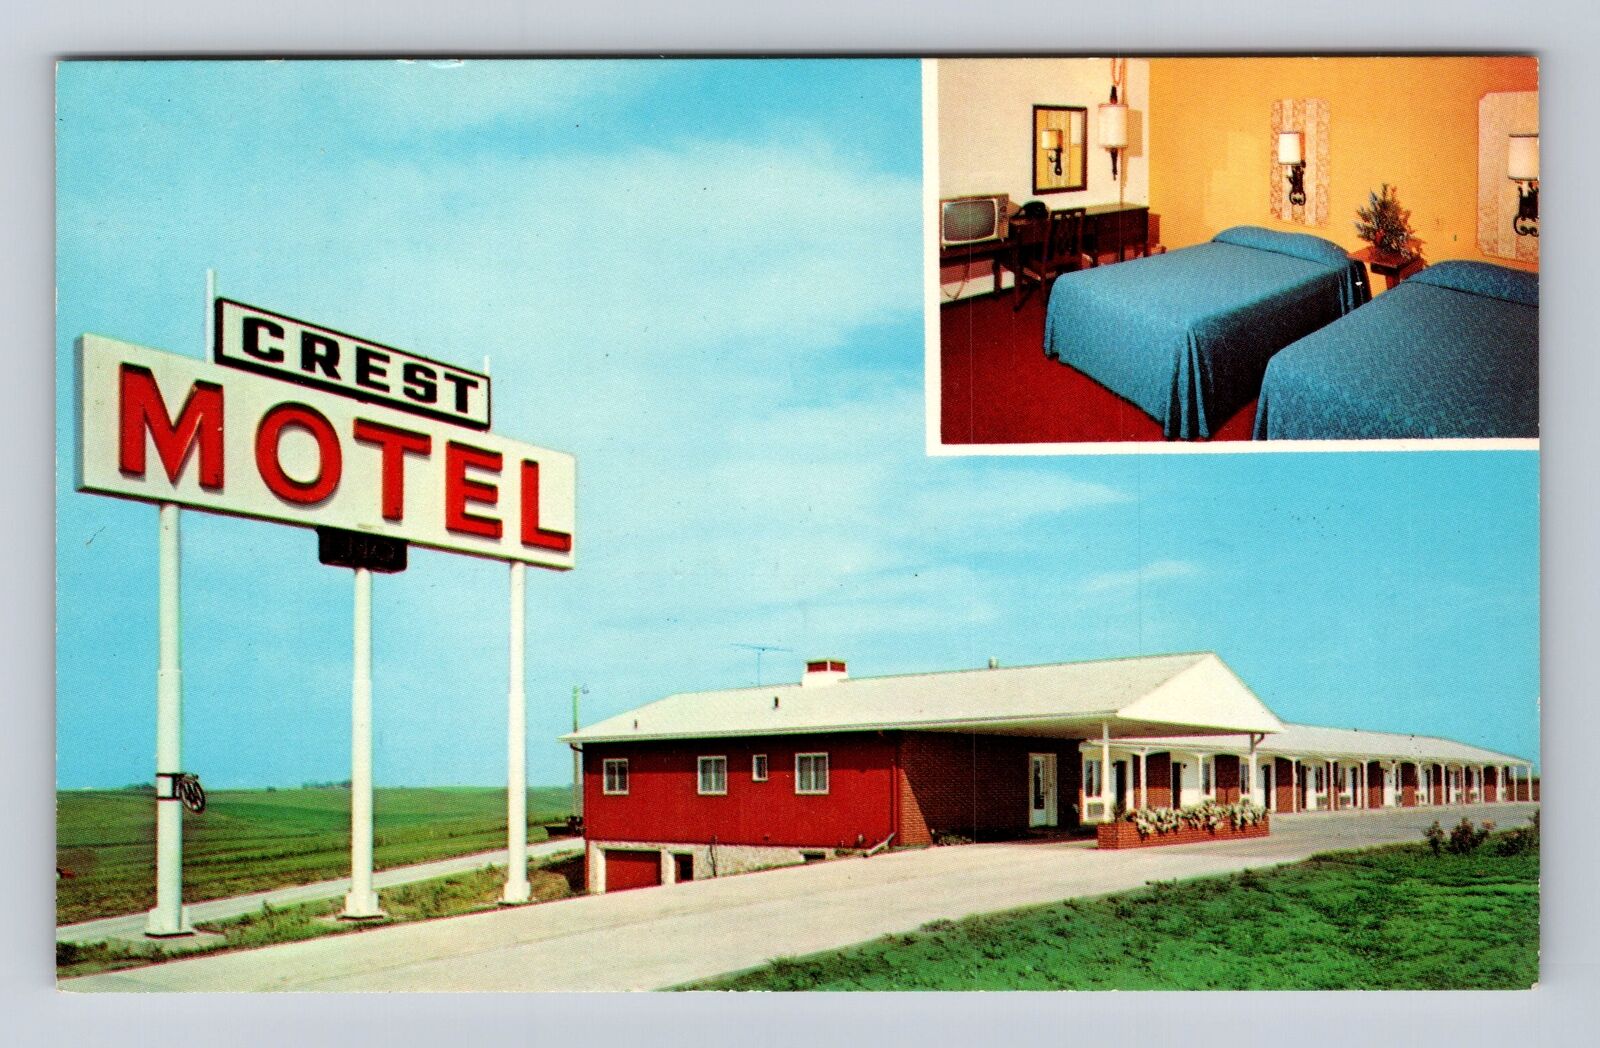 Williamsburg IA-Iowa, The Crest Motel Advertising, Vintage Souvenir Postcard